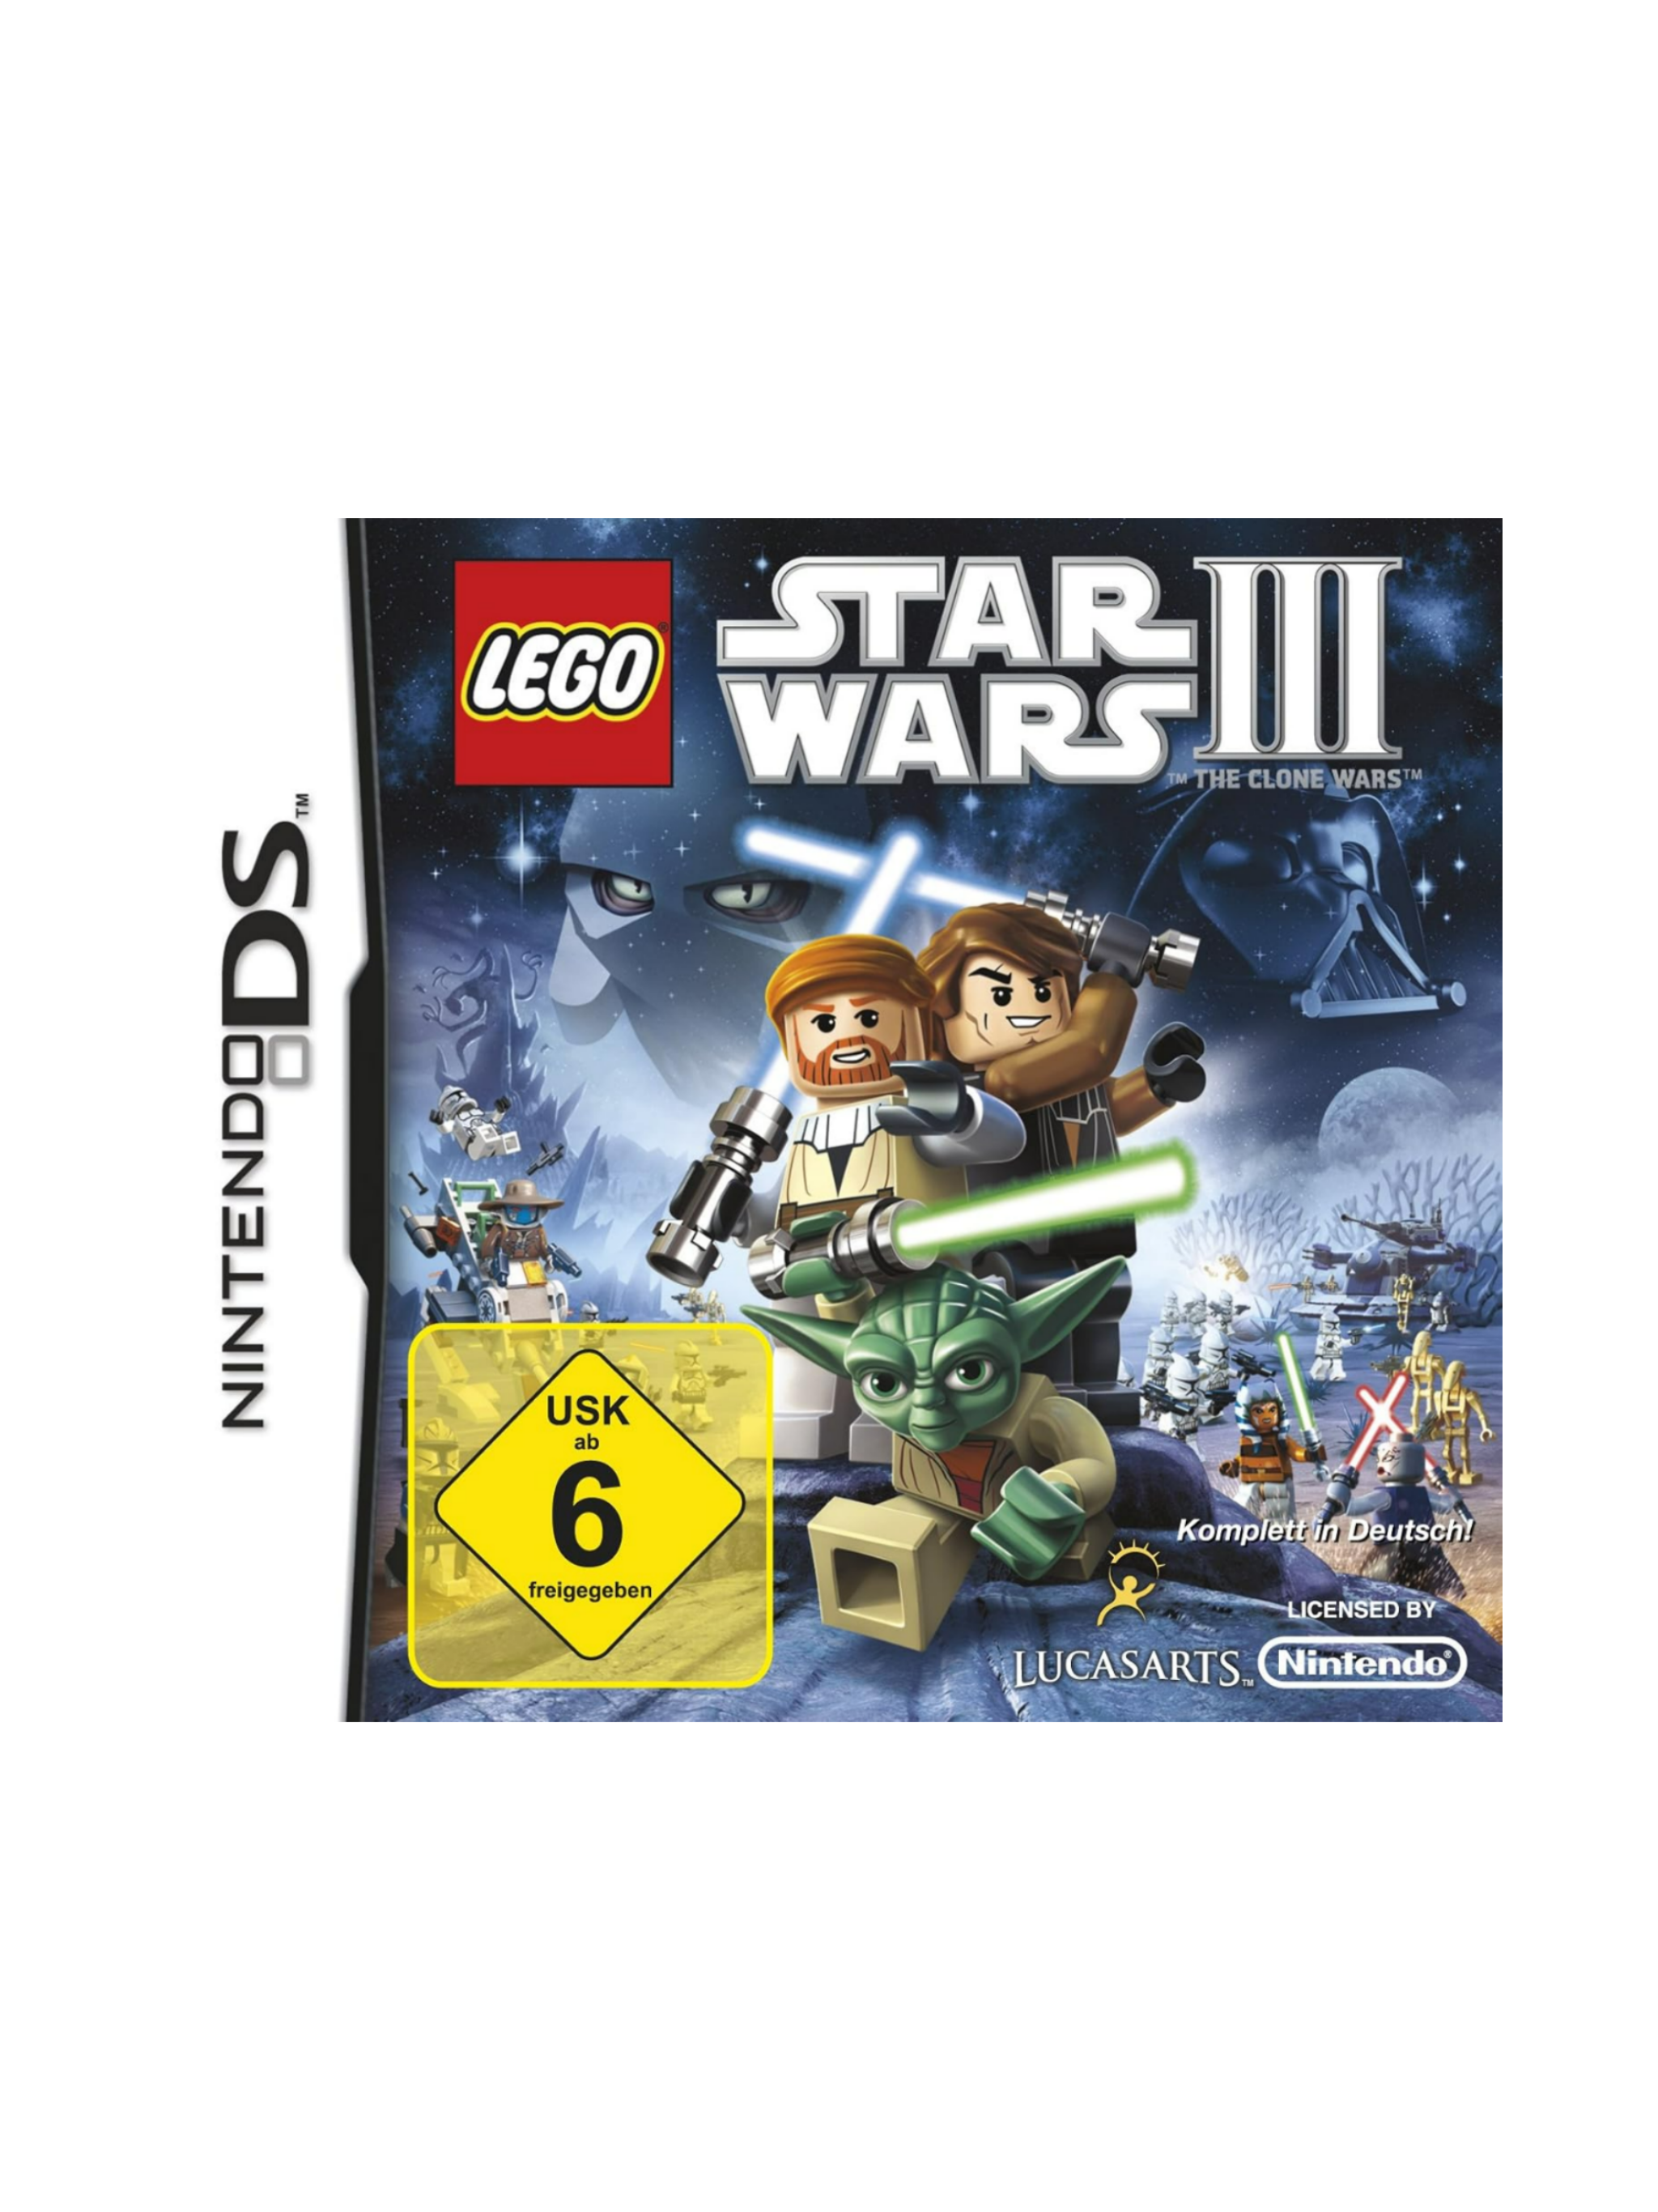 Lego Star Wars III: The Clone Wars Nintendo DS